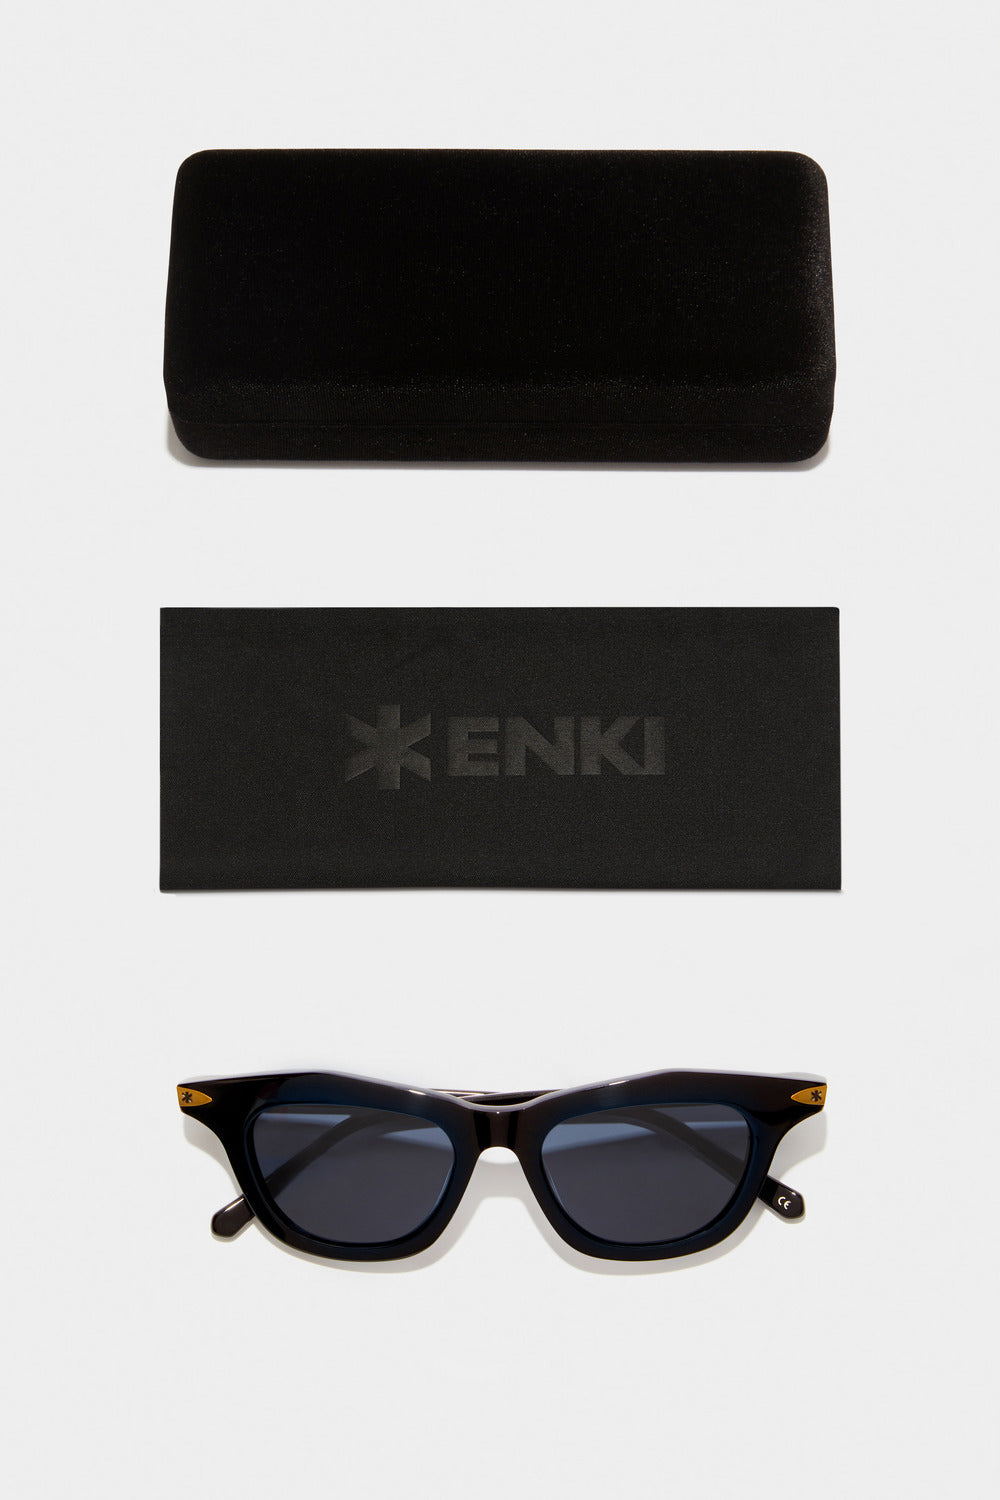 www.enkieyewear.com Panaetius Men’s and Women’s Sunglasses